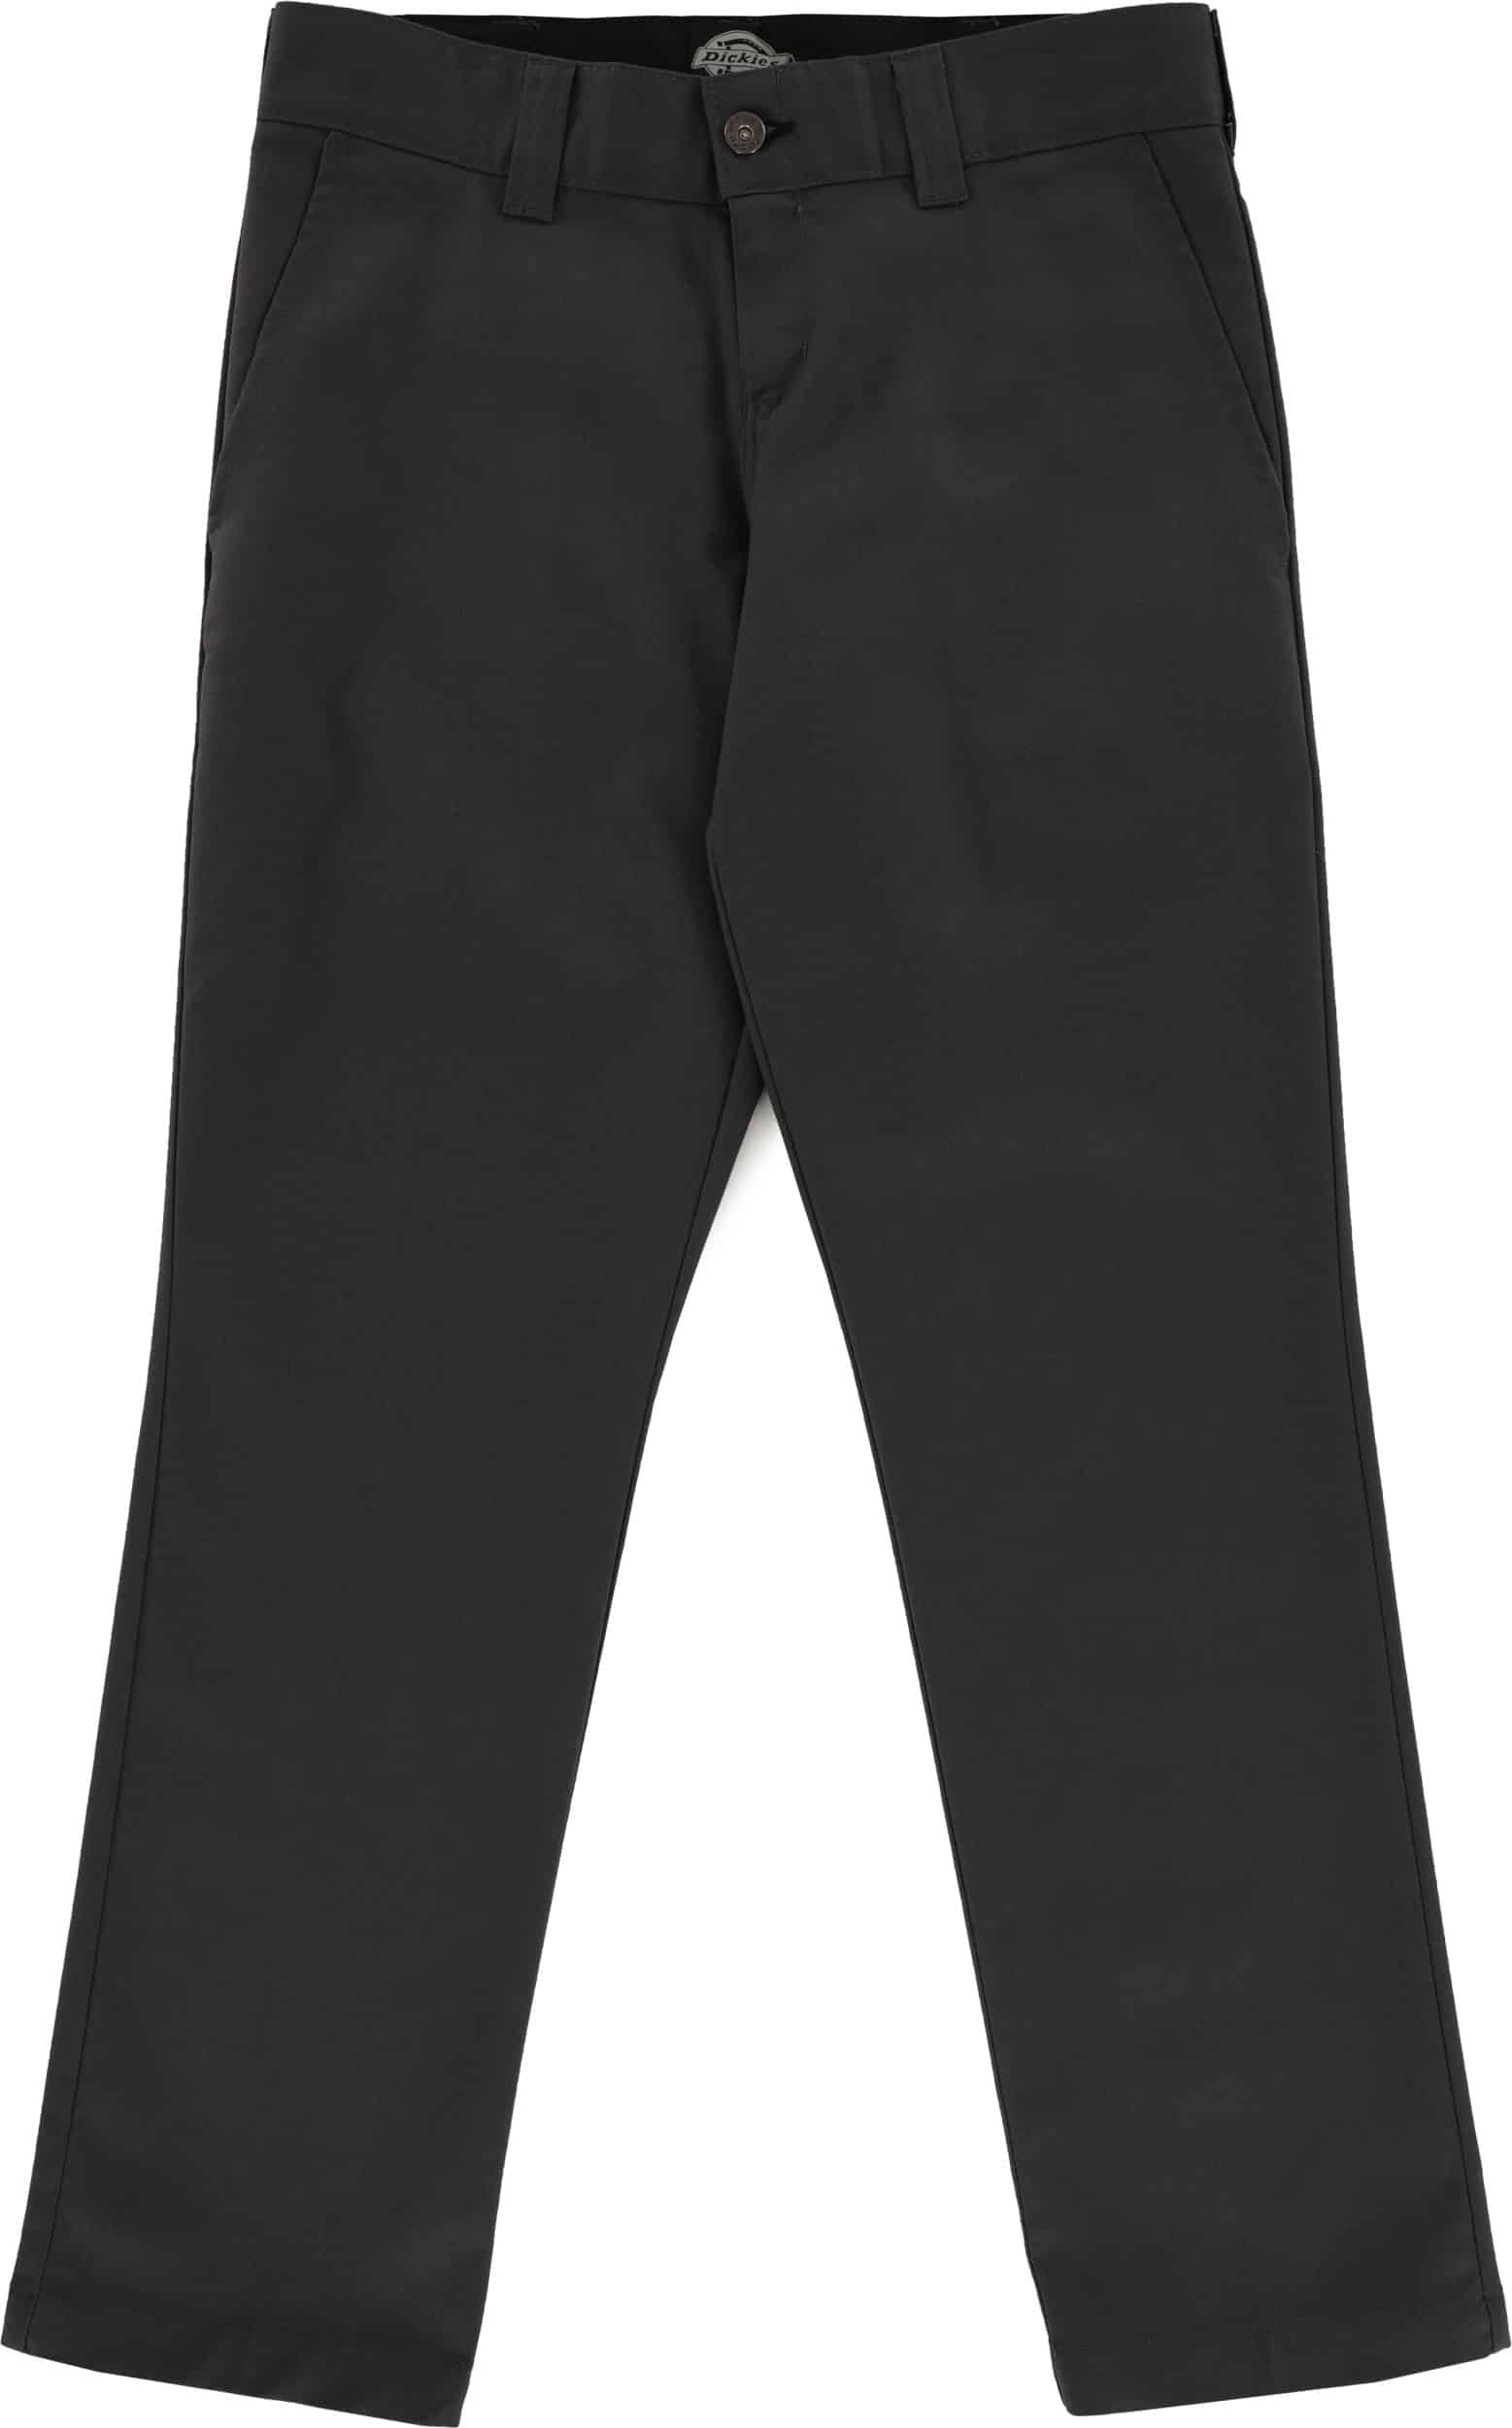 Dickies Skate Slim Twill Pants (Charcoal) – Shredz Shop Skate